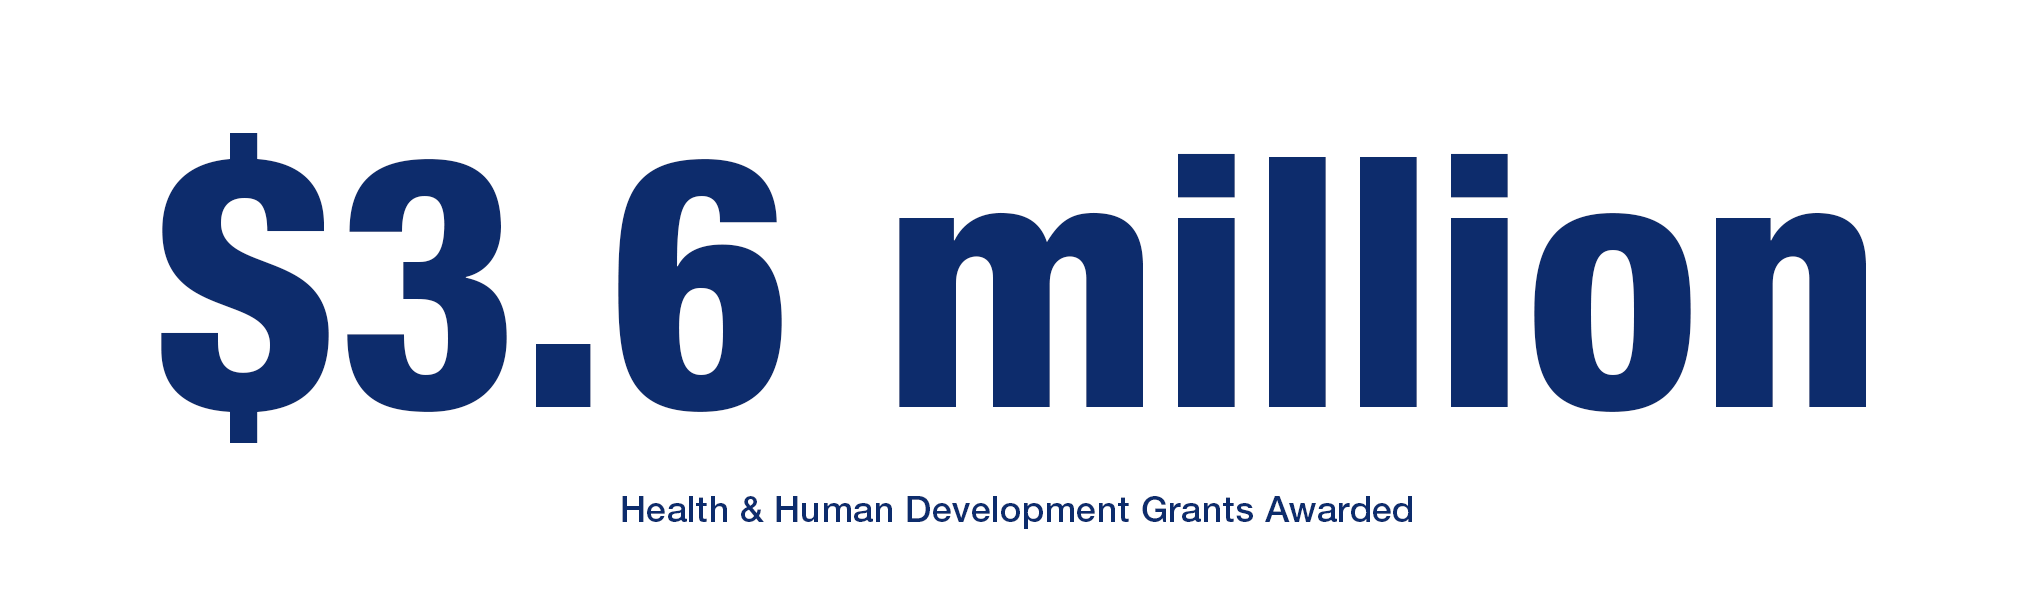 $3.6 million Health & Human Development Grants Awarded